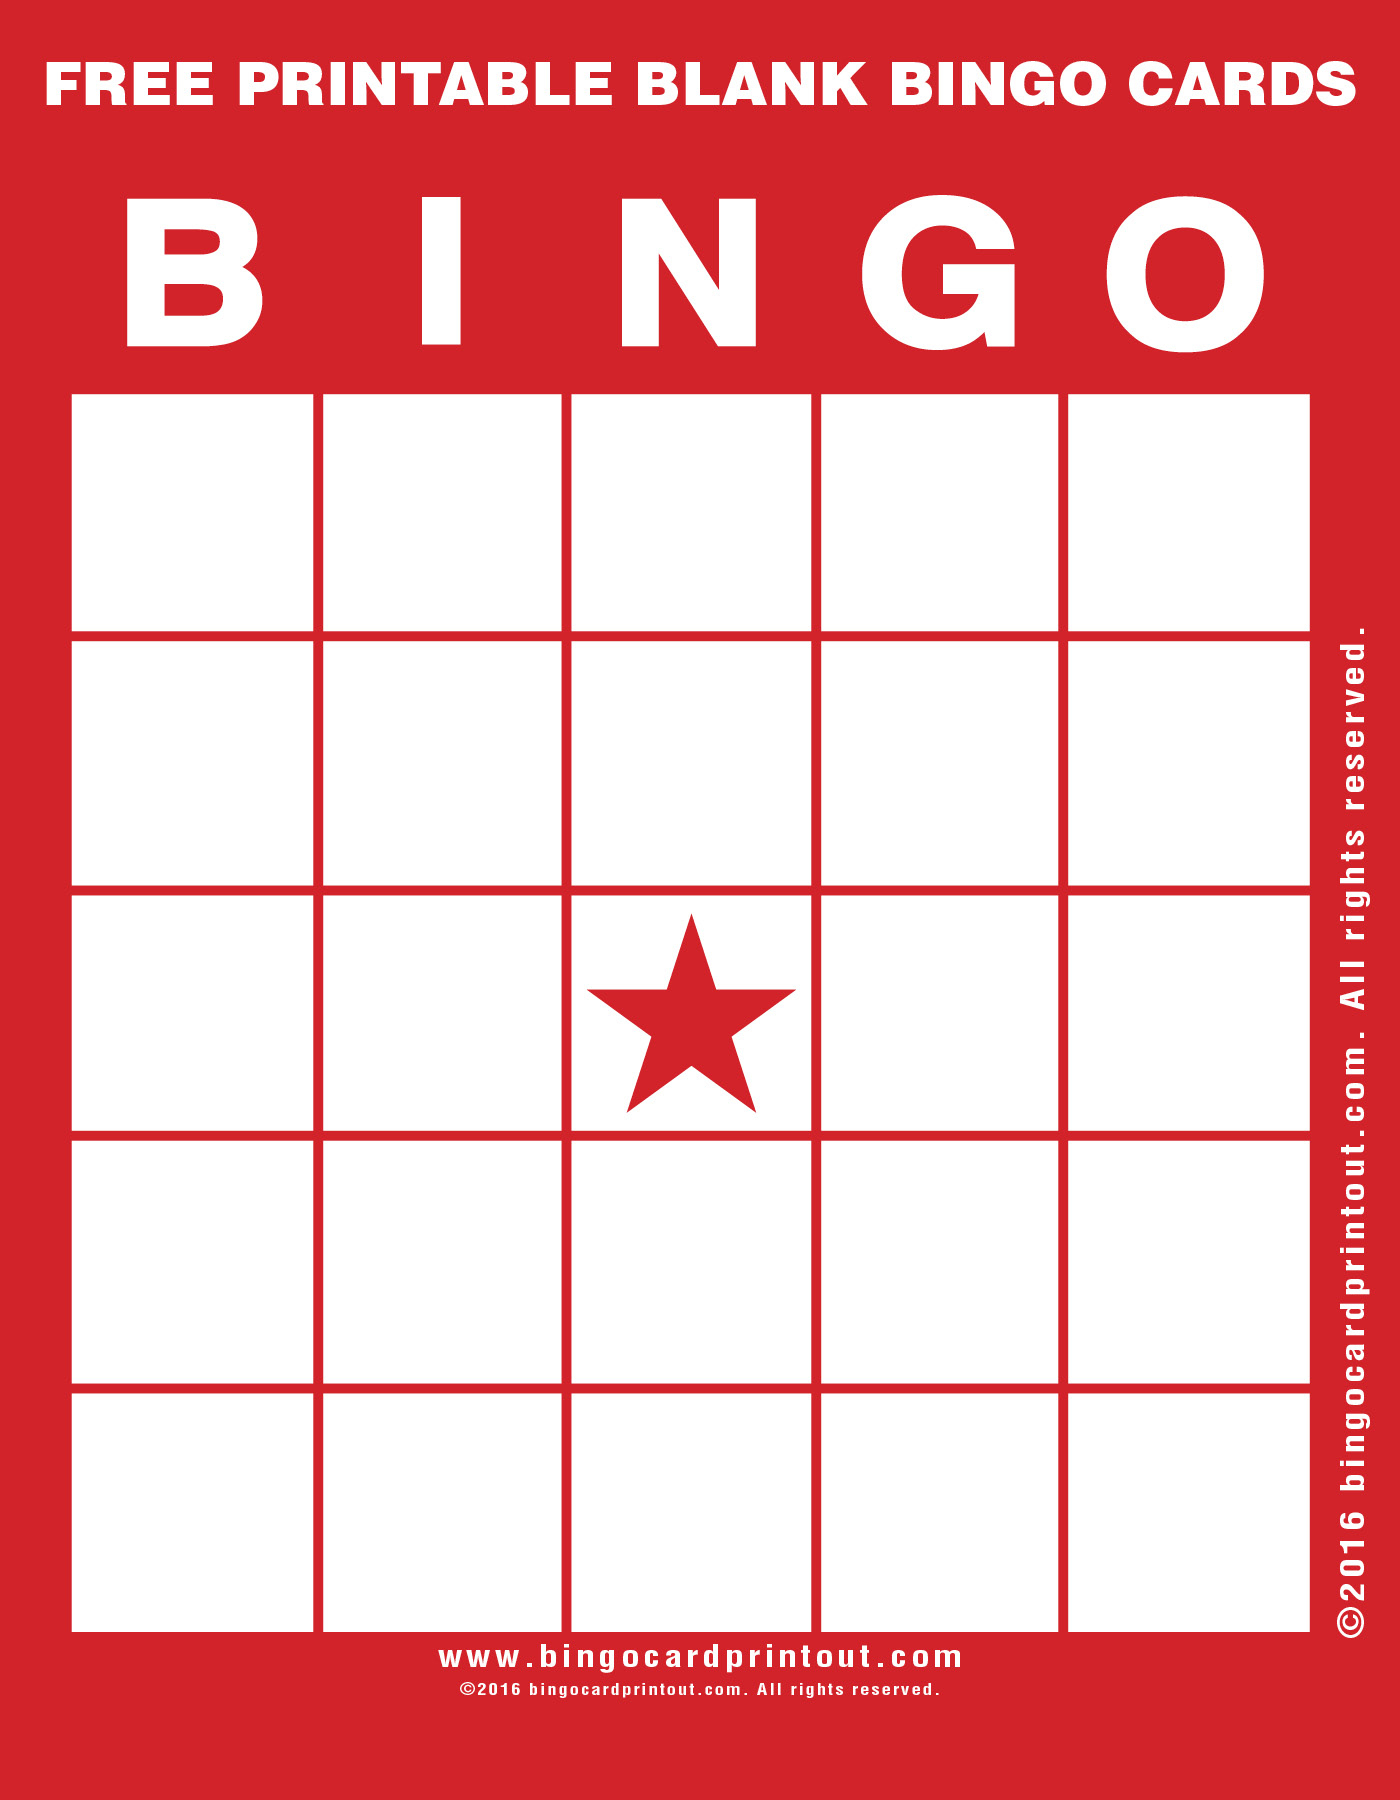 Free Printable Blank Bingo Cards - Bingocardprintout